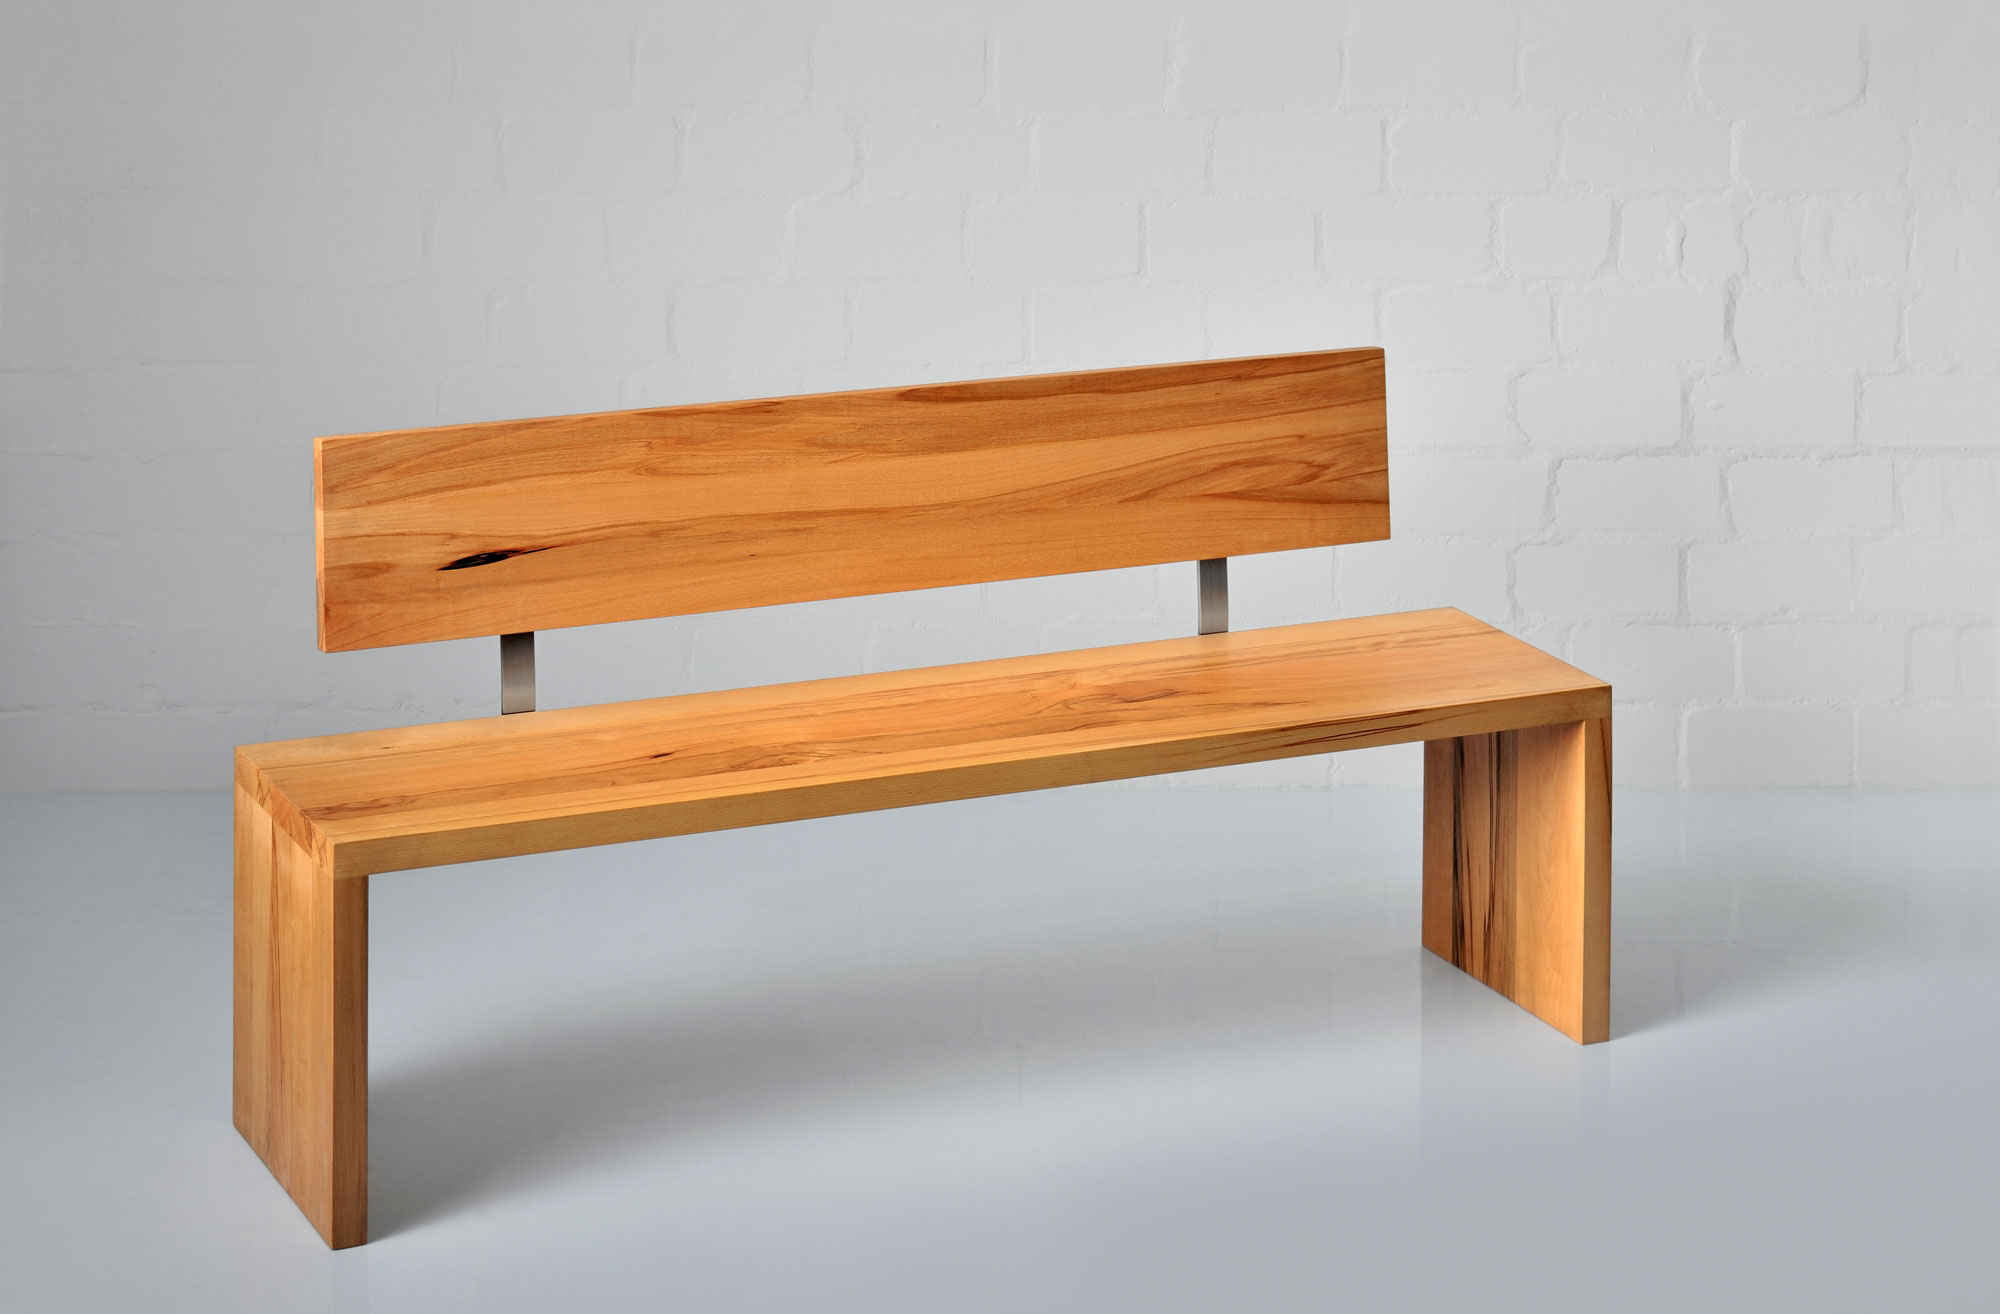 Custom Made Bench MENA 4 nef0360 custom made in solid wood by vitamin design